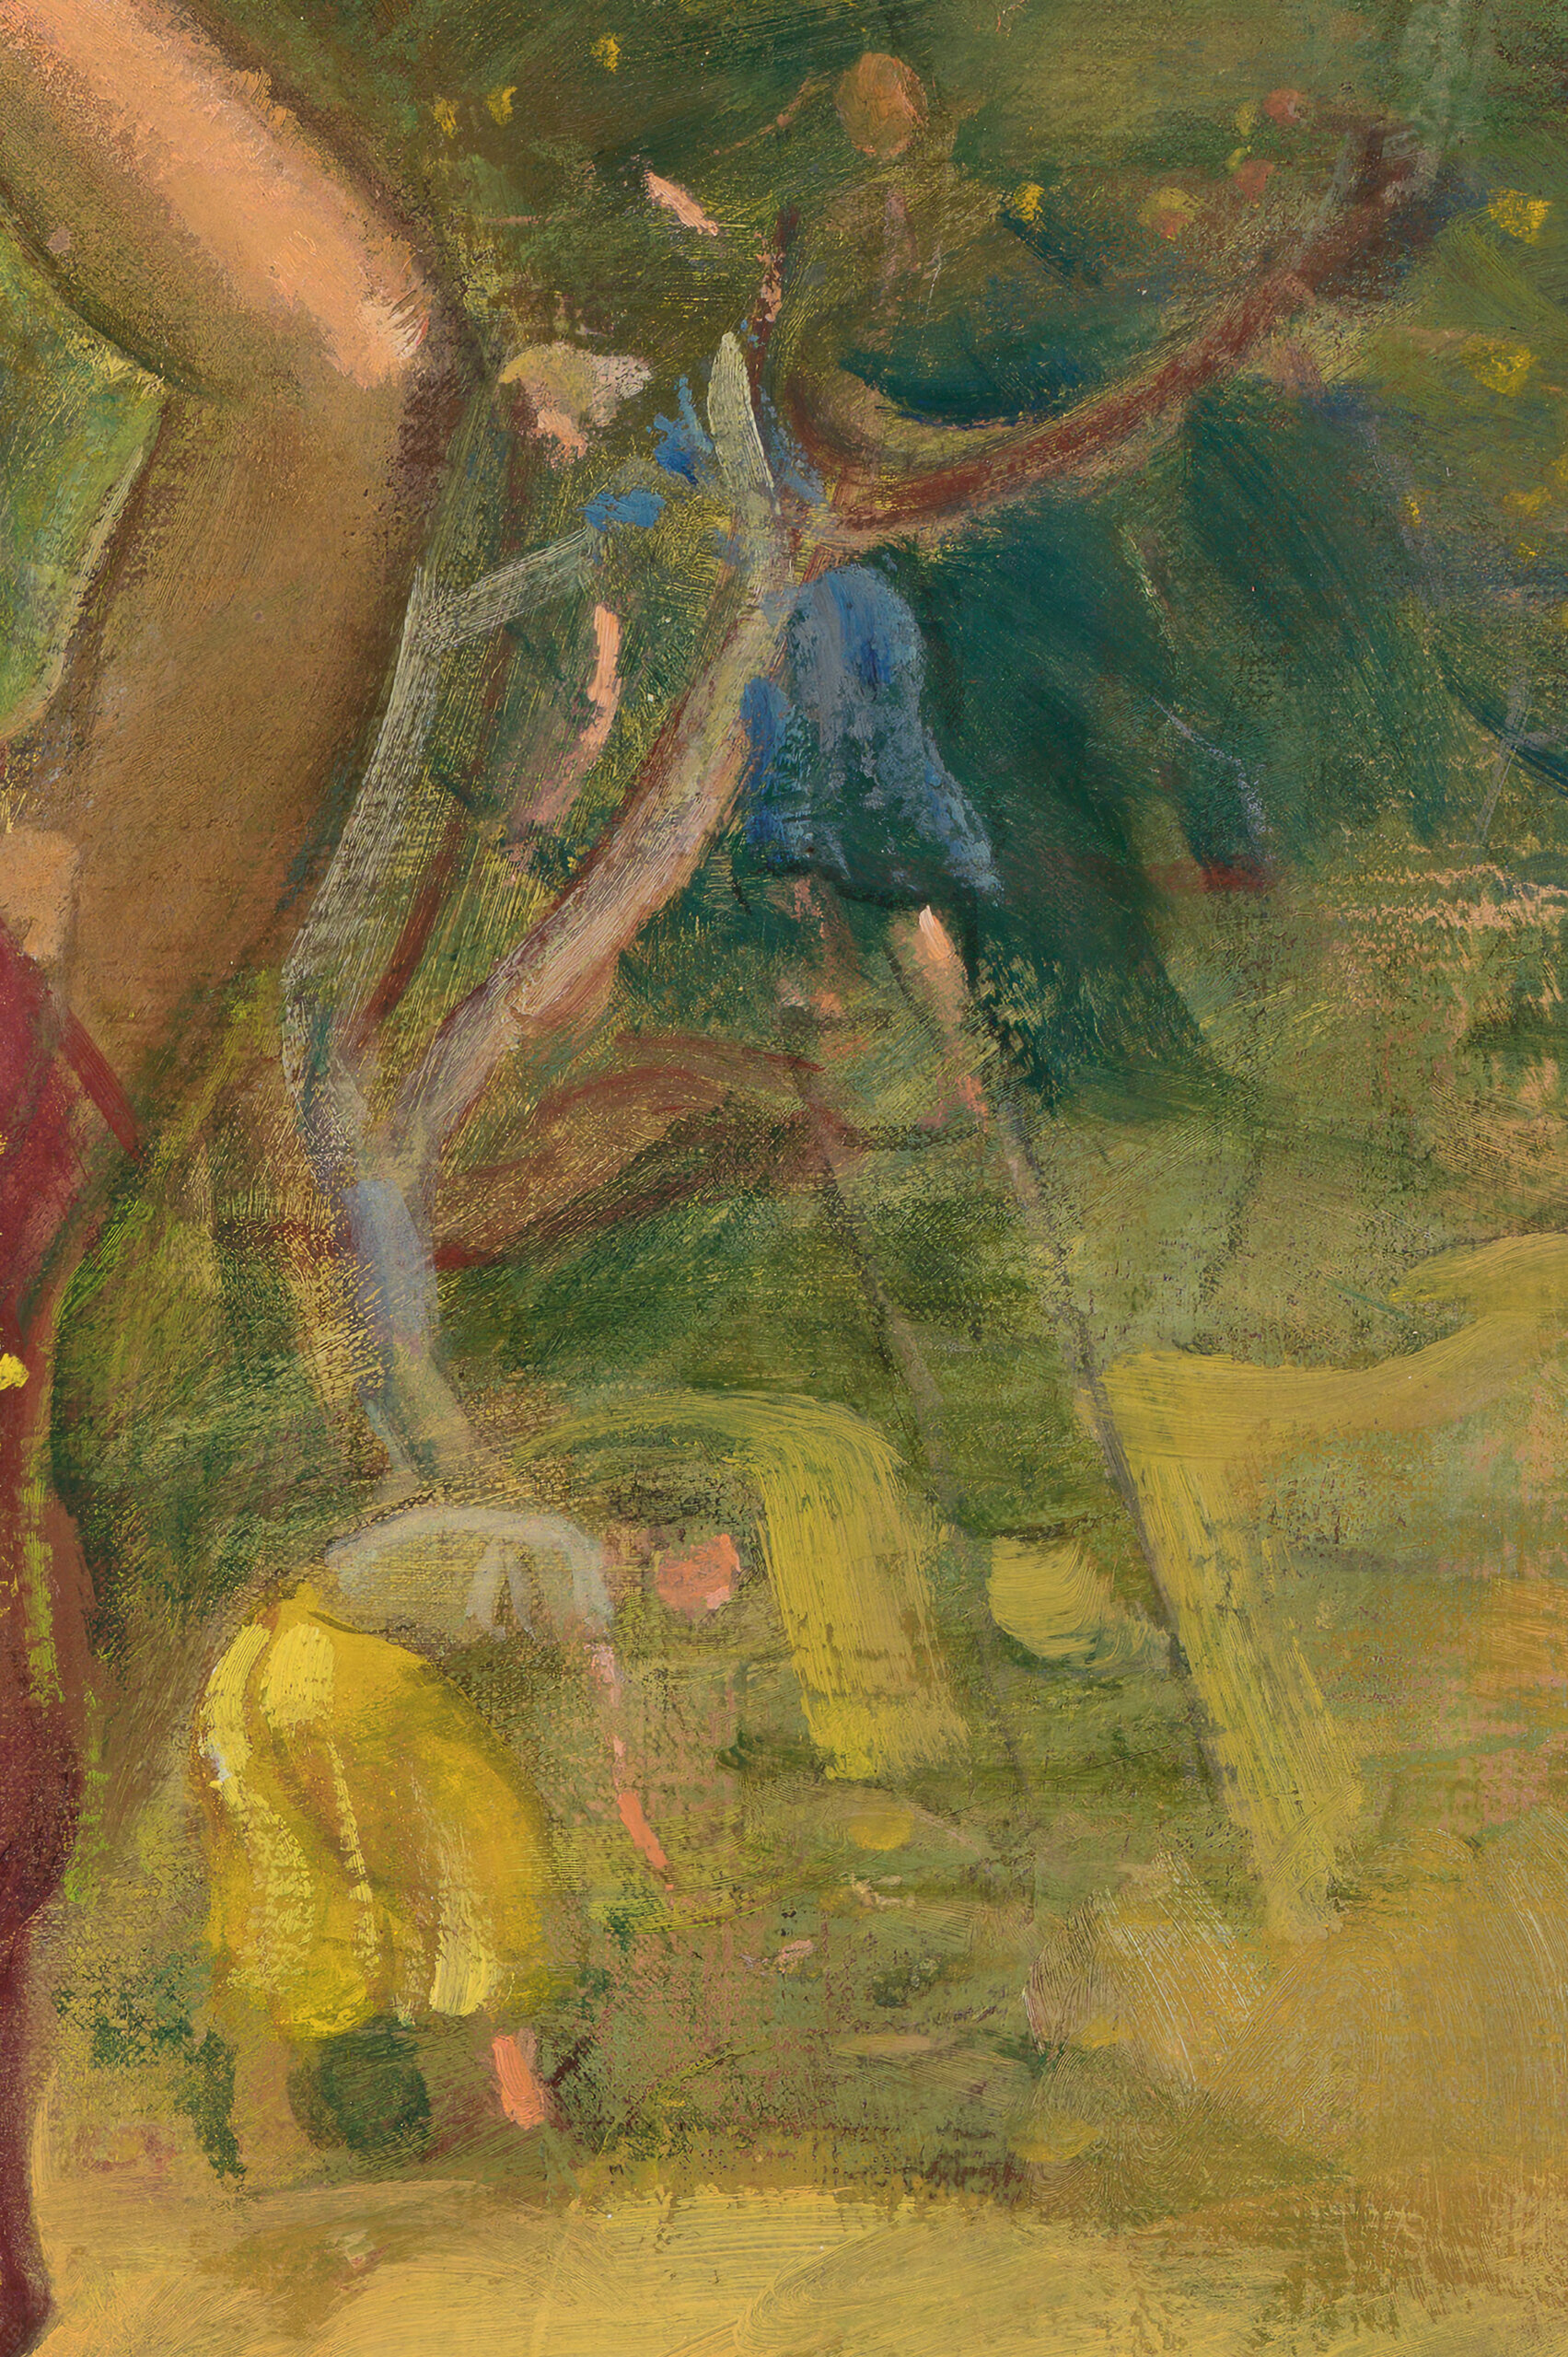 August Jansen “Naised õuntega”, 1945. 80,4 x 68,5 cm.